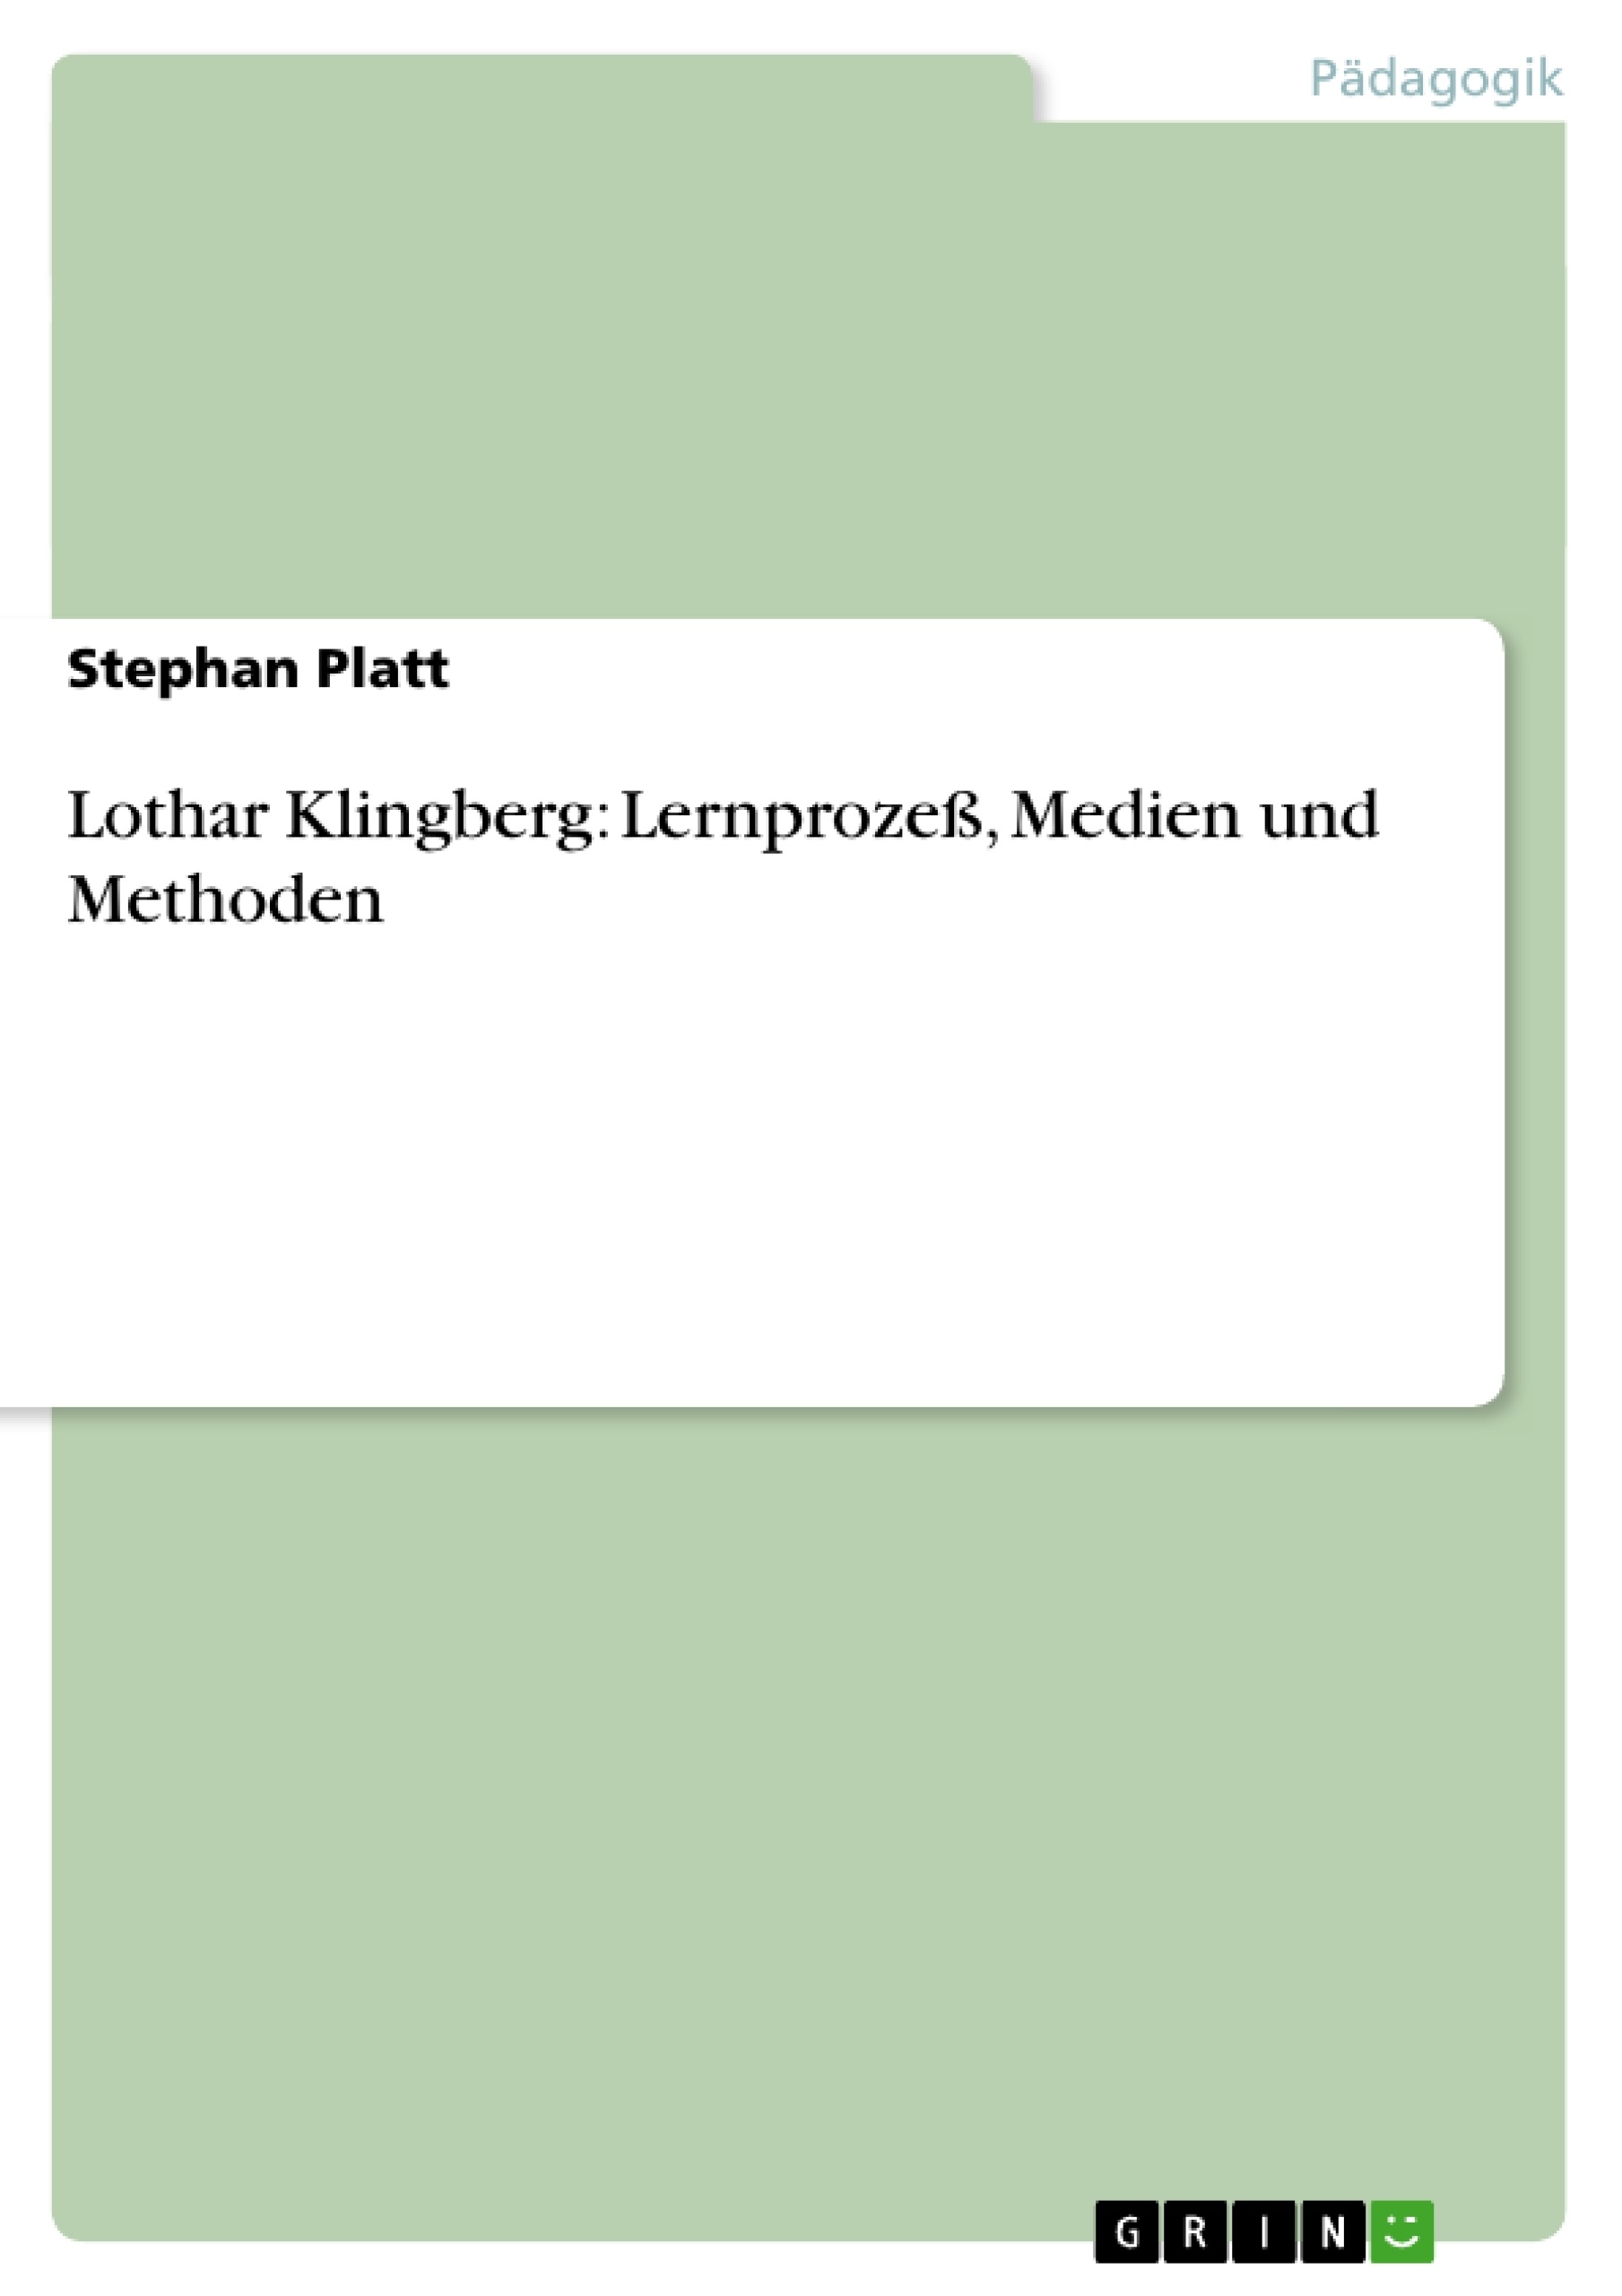 Title: Lothar Klingberg: Lernprozeß, Medien und Methoden